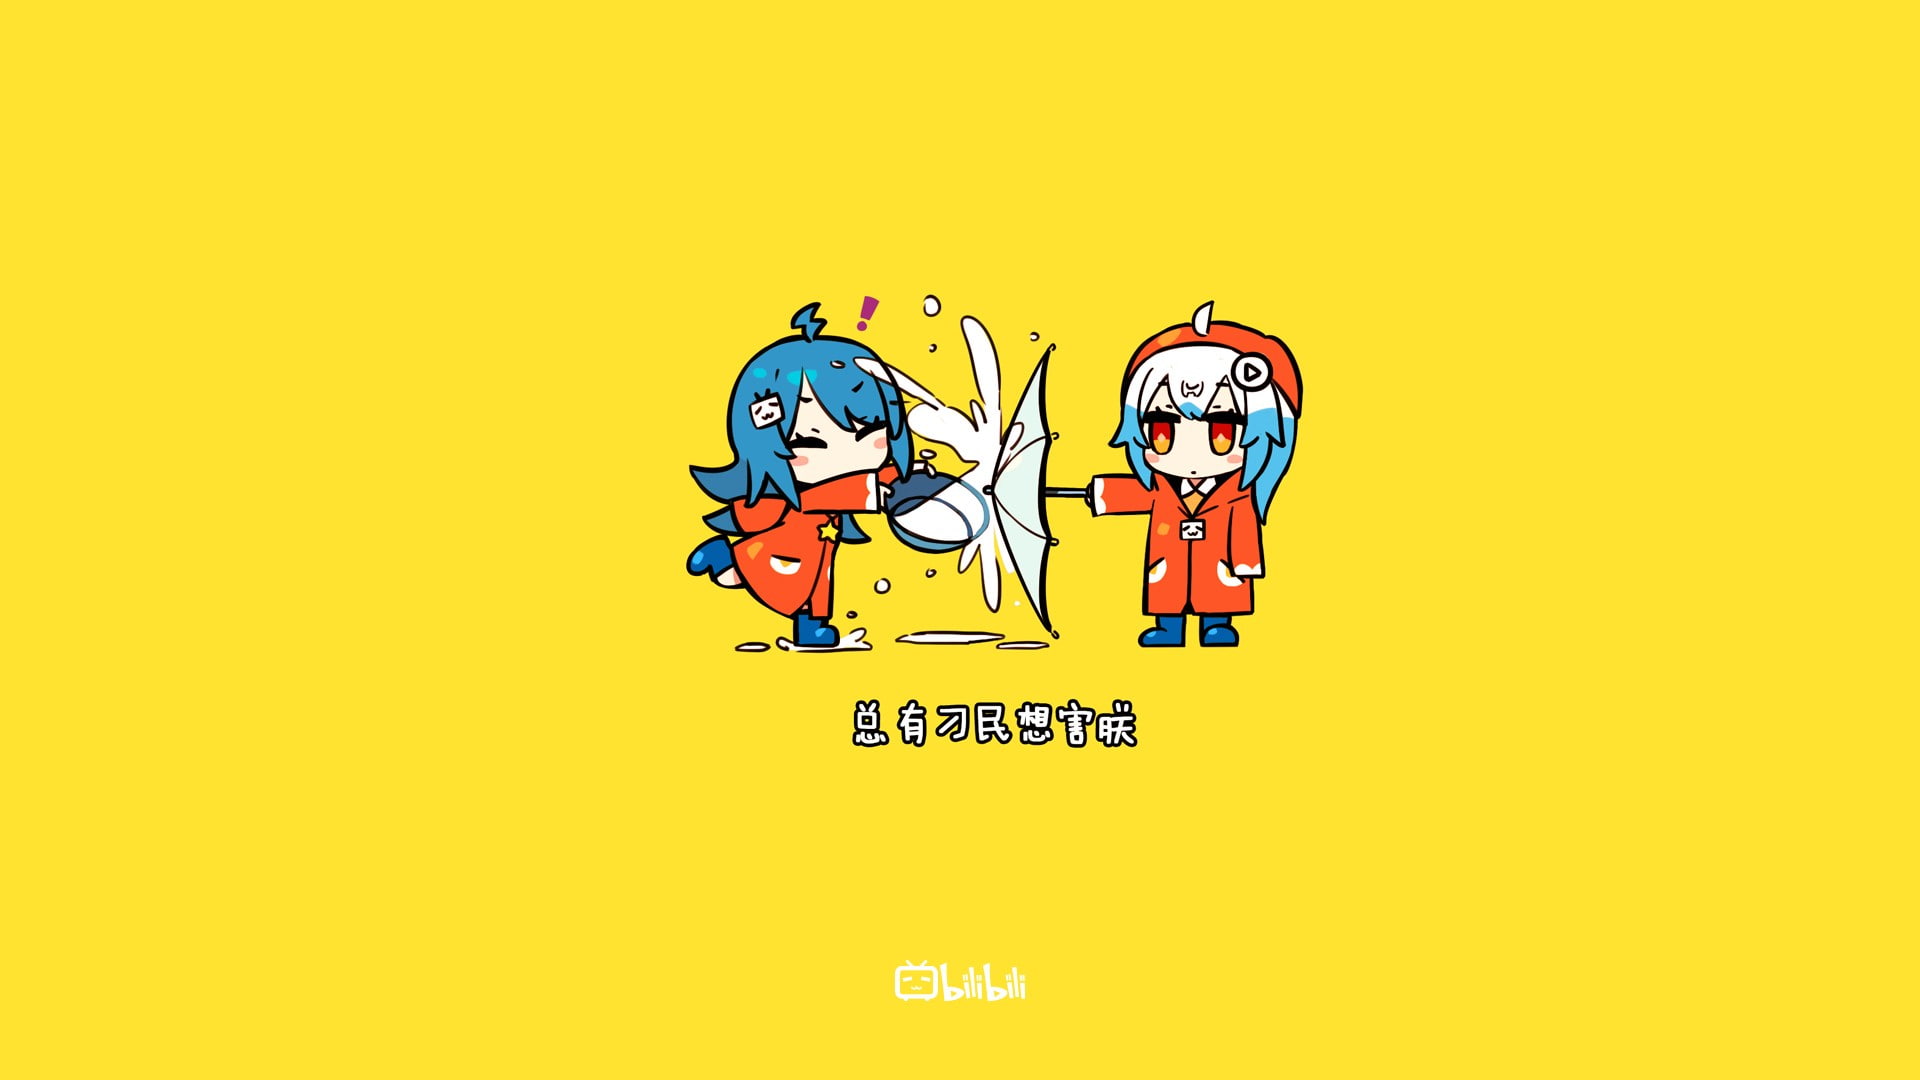 bilibili, anime girls, yellow, communication, yellow background